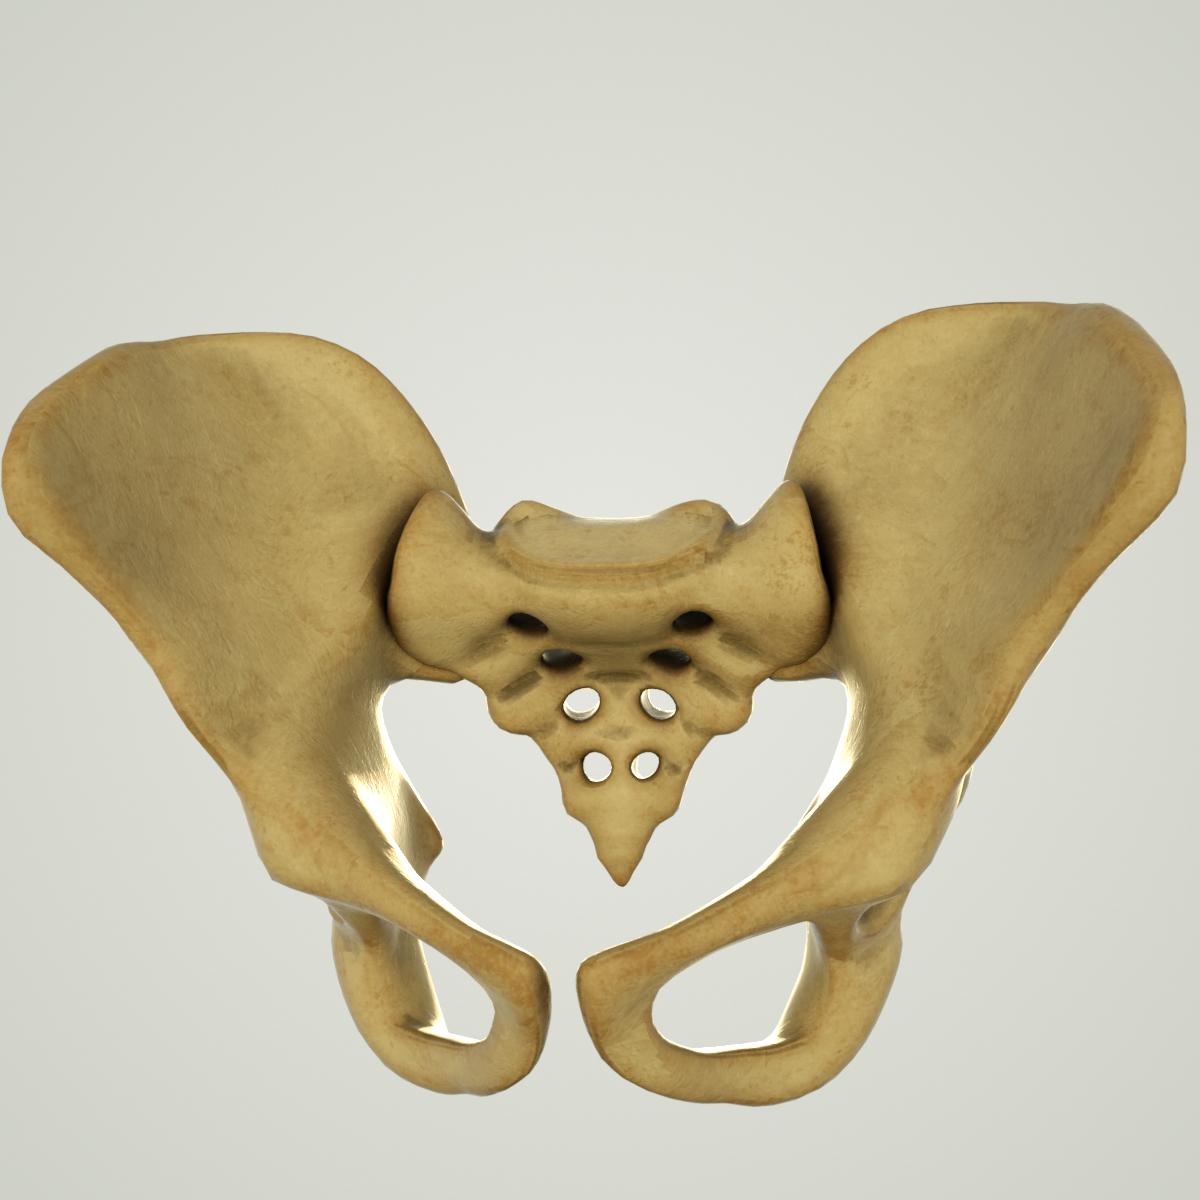 Human Pelvic Bone Spine 3d Model Turbosquid 1381150 3165